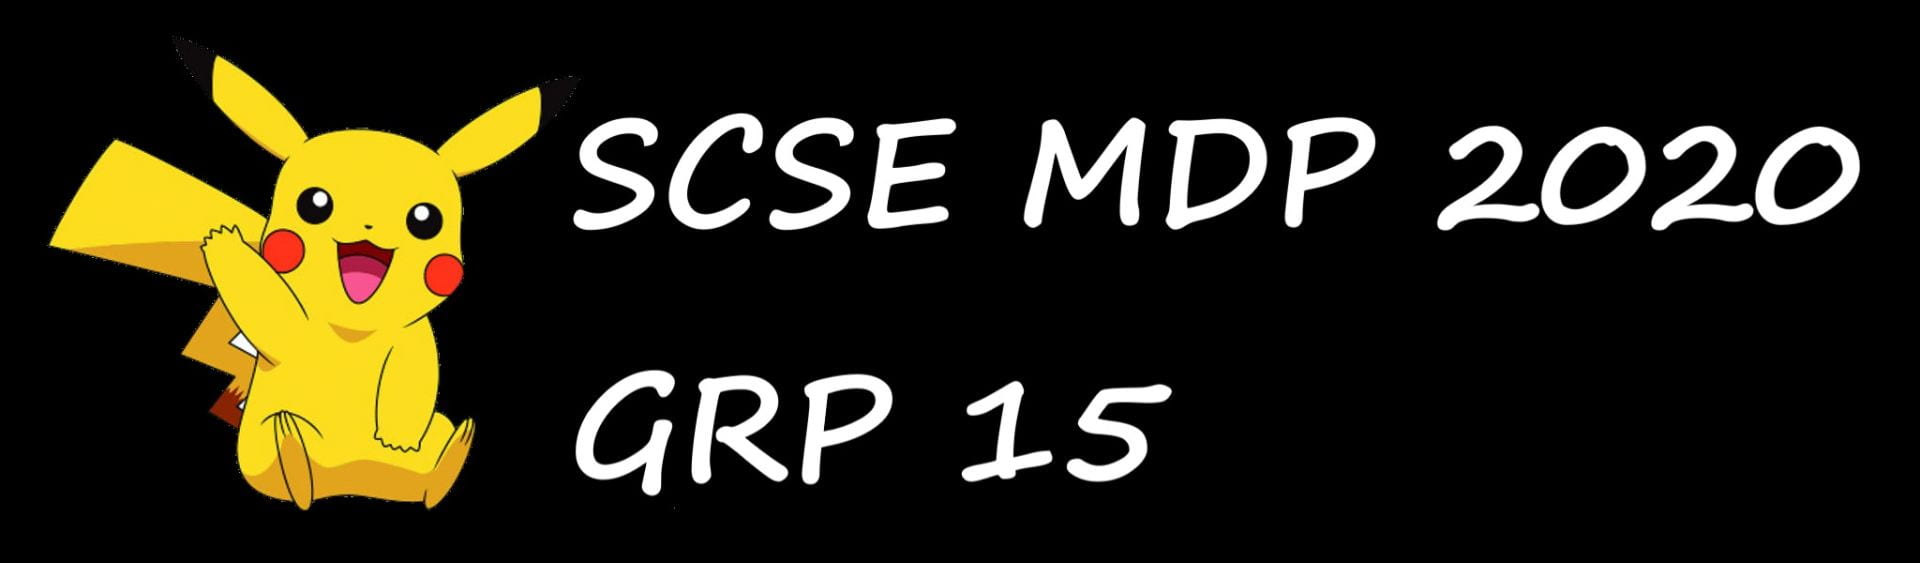 SCSE MDP 2020 Group 15